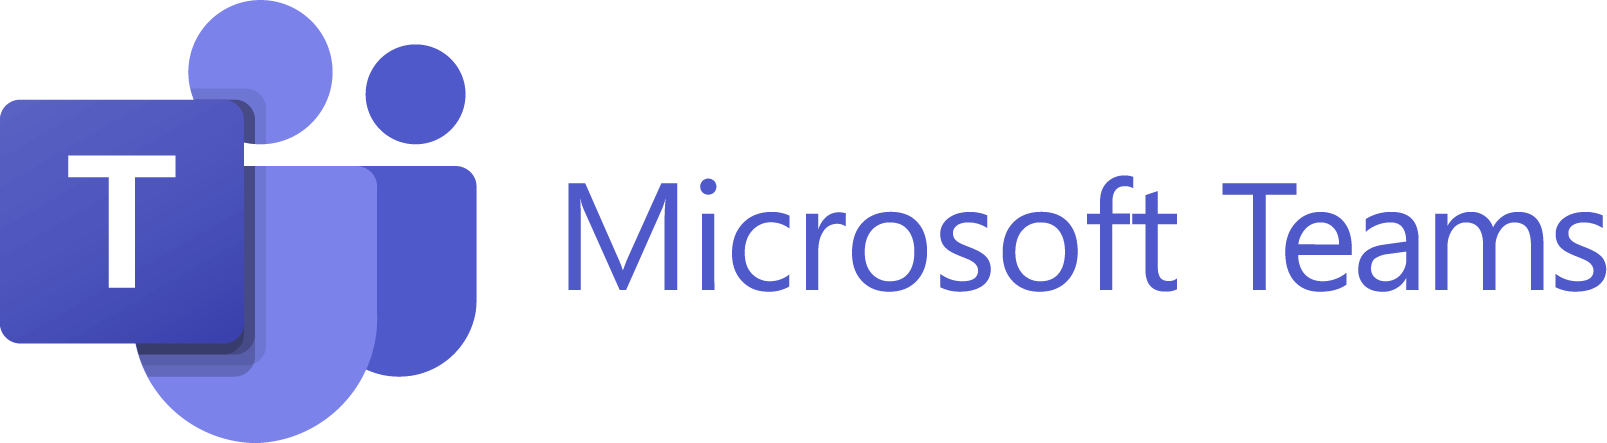 Microsoft Teams のロゴ